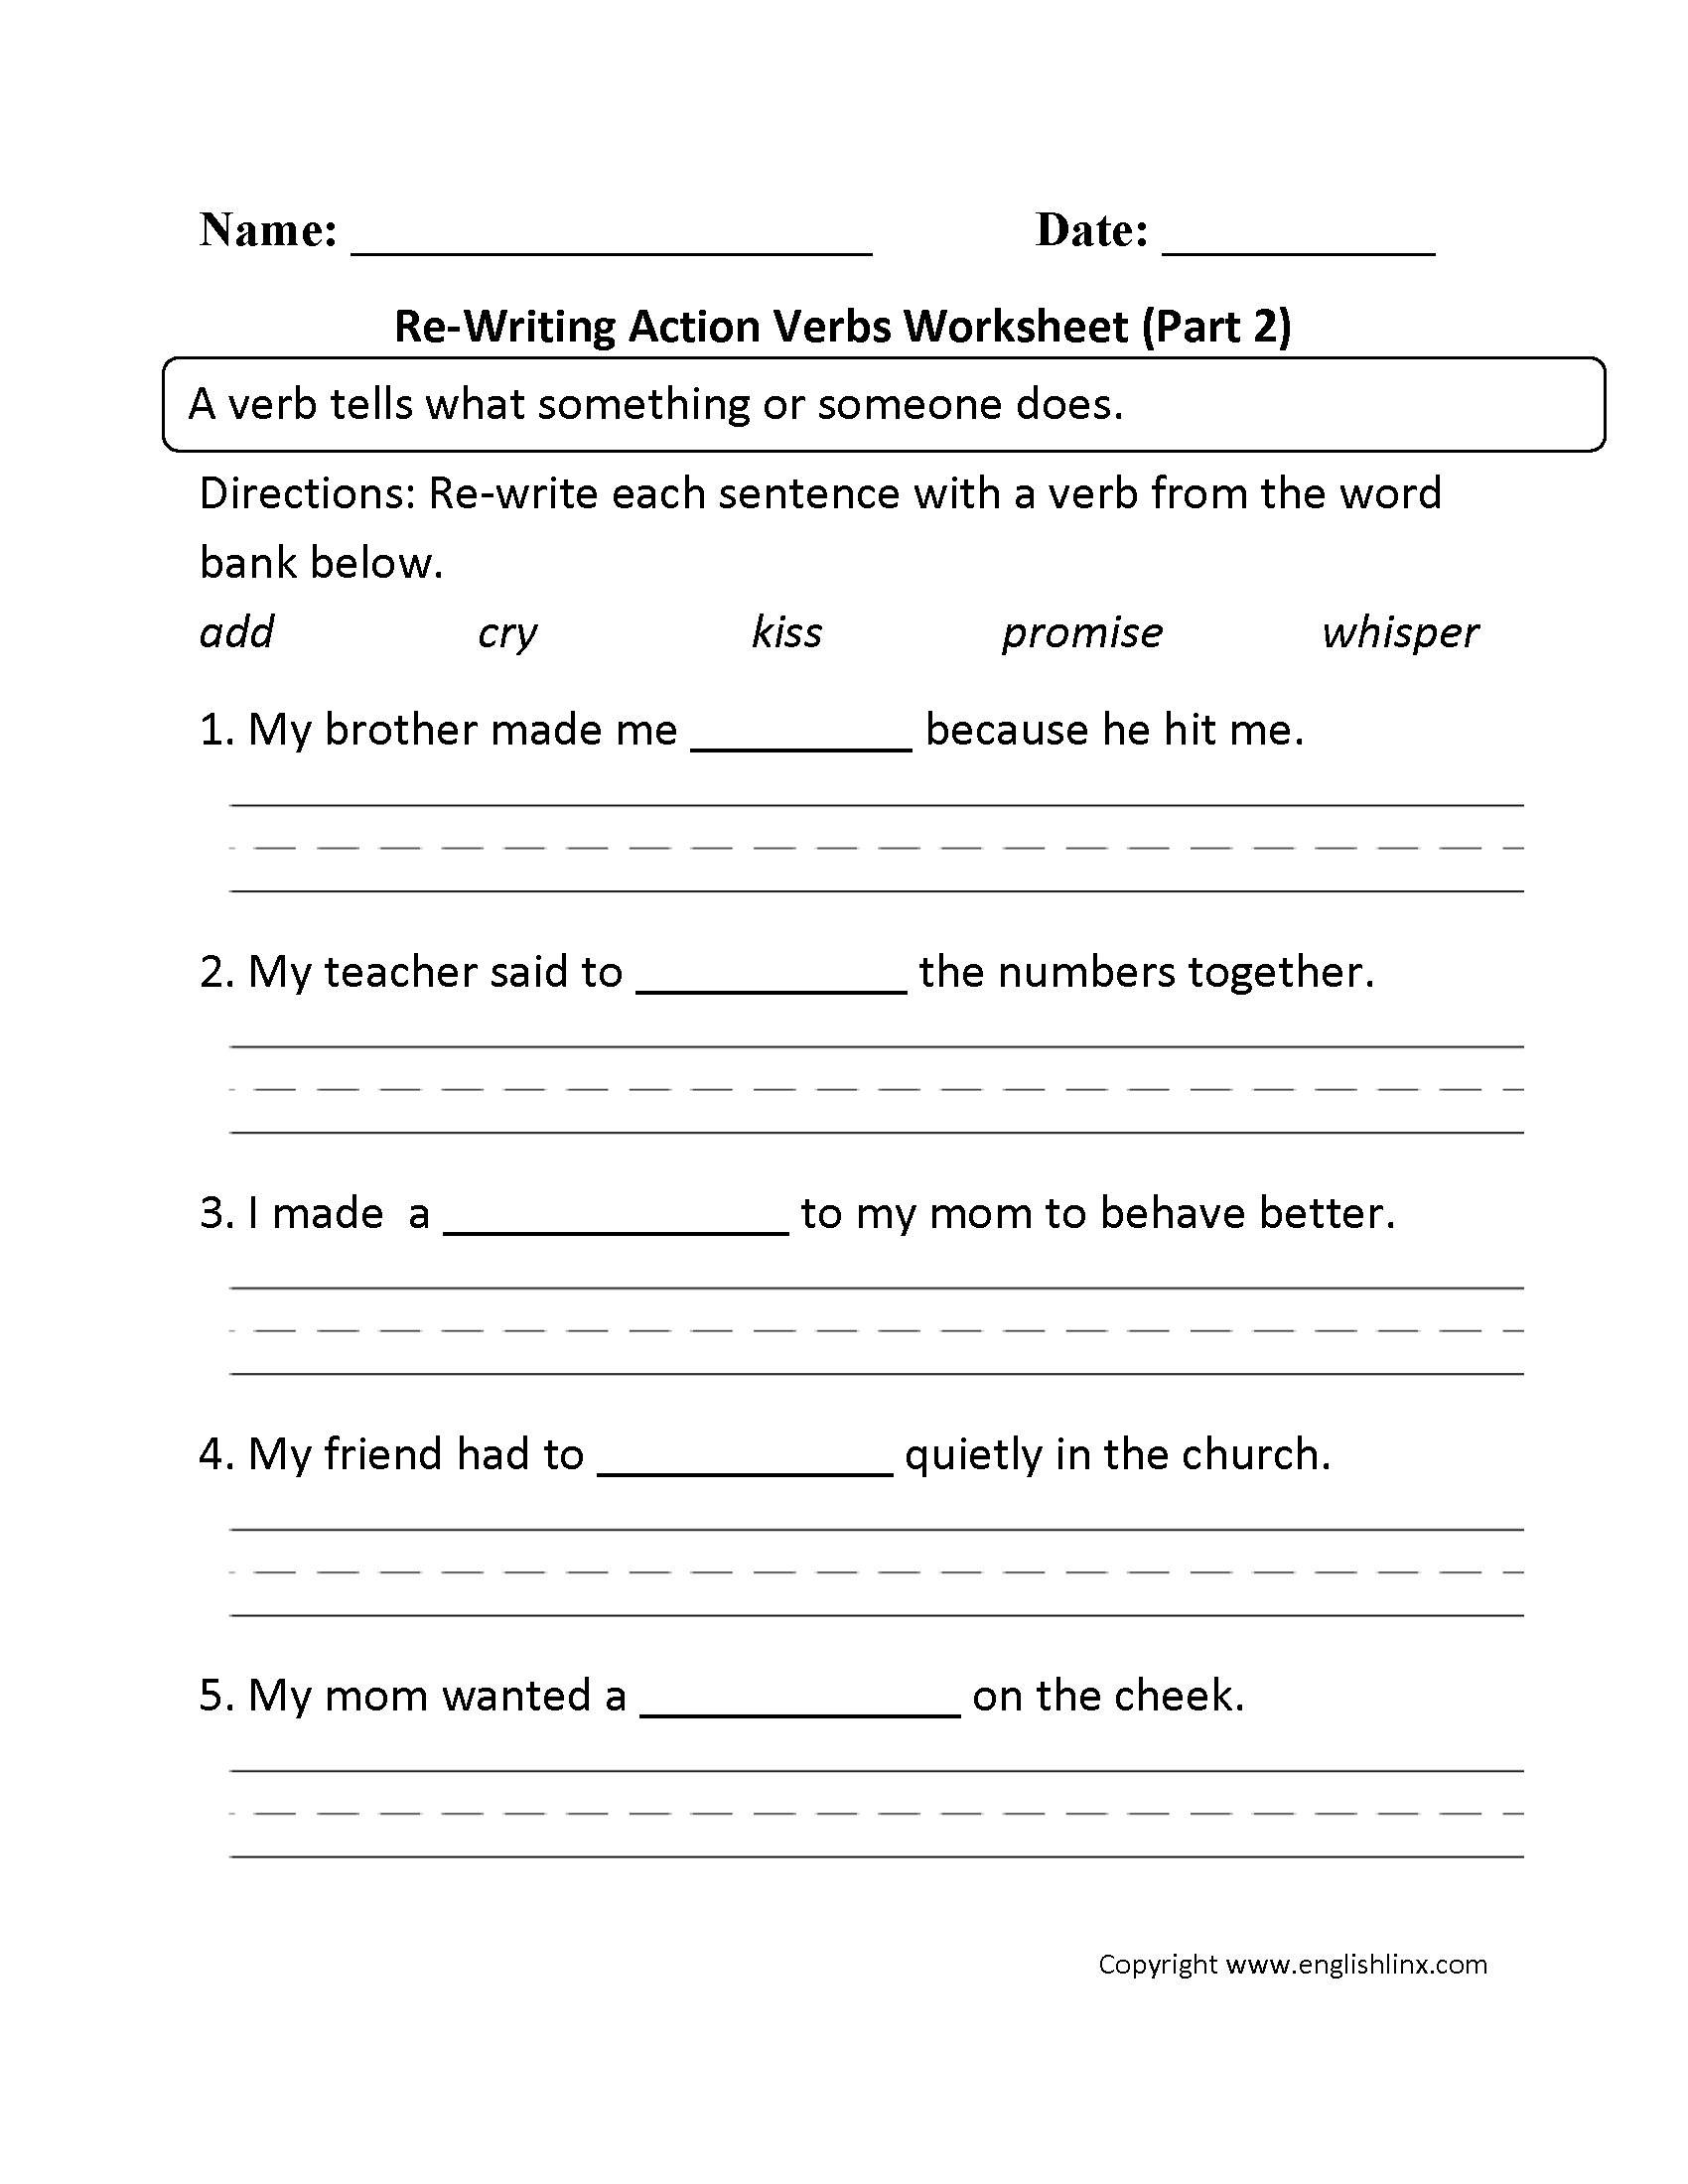 Re-Writing Action Verbs Worksheet Part 2